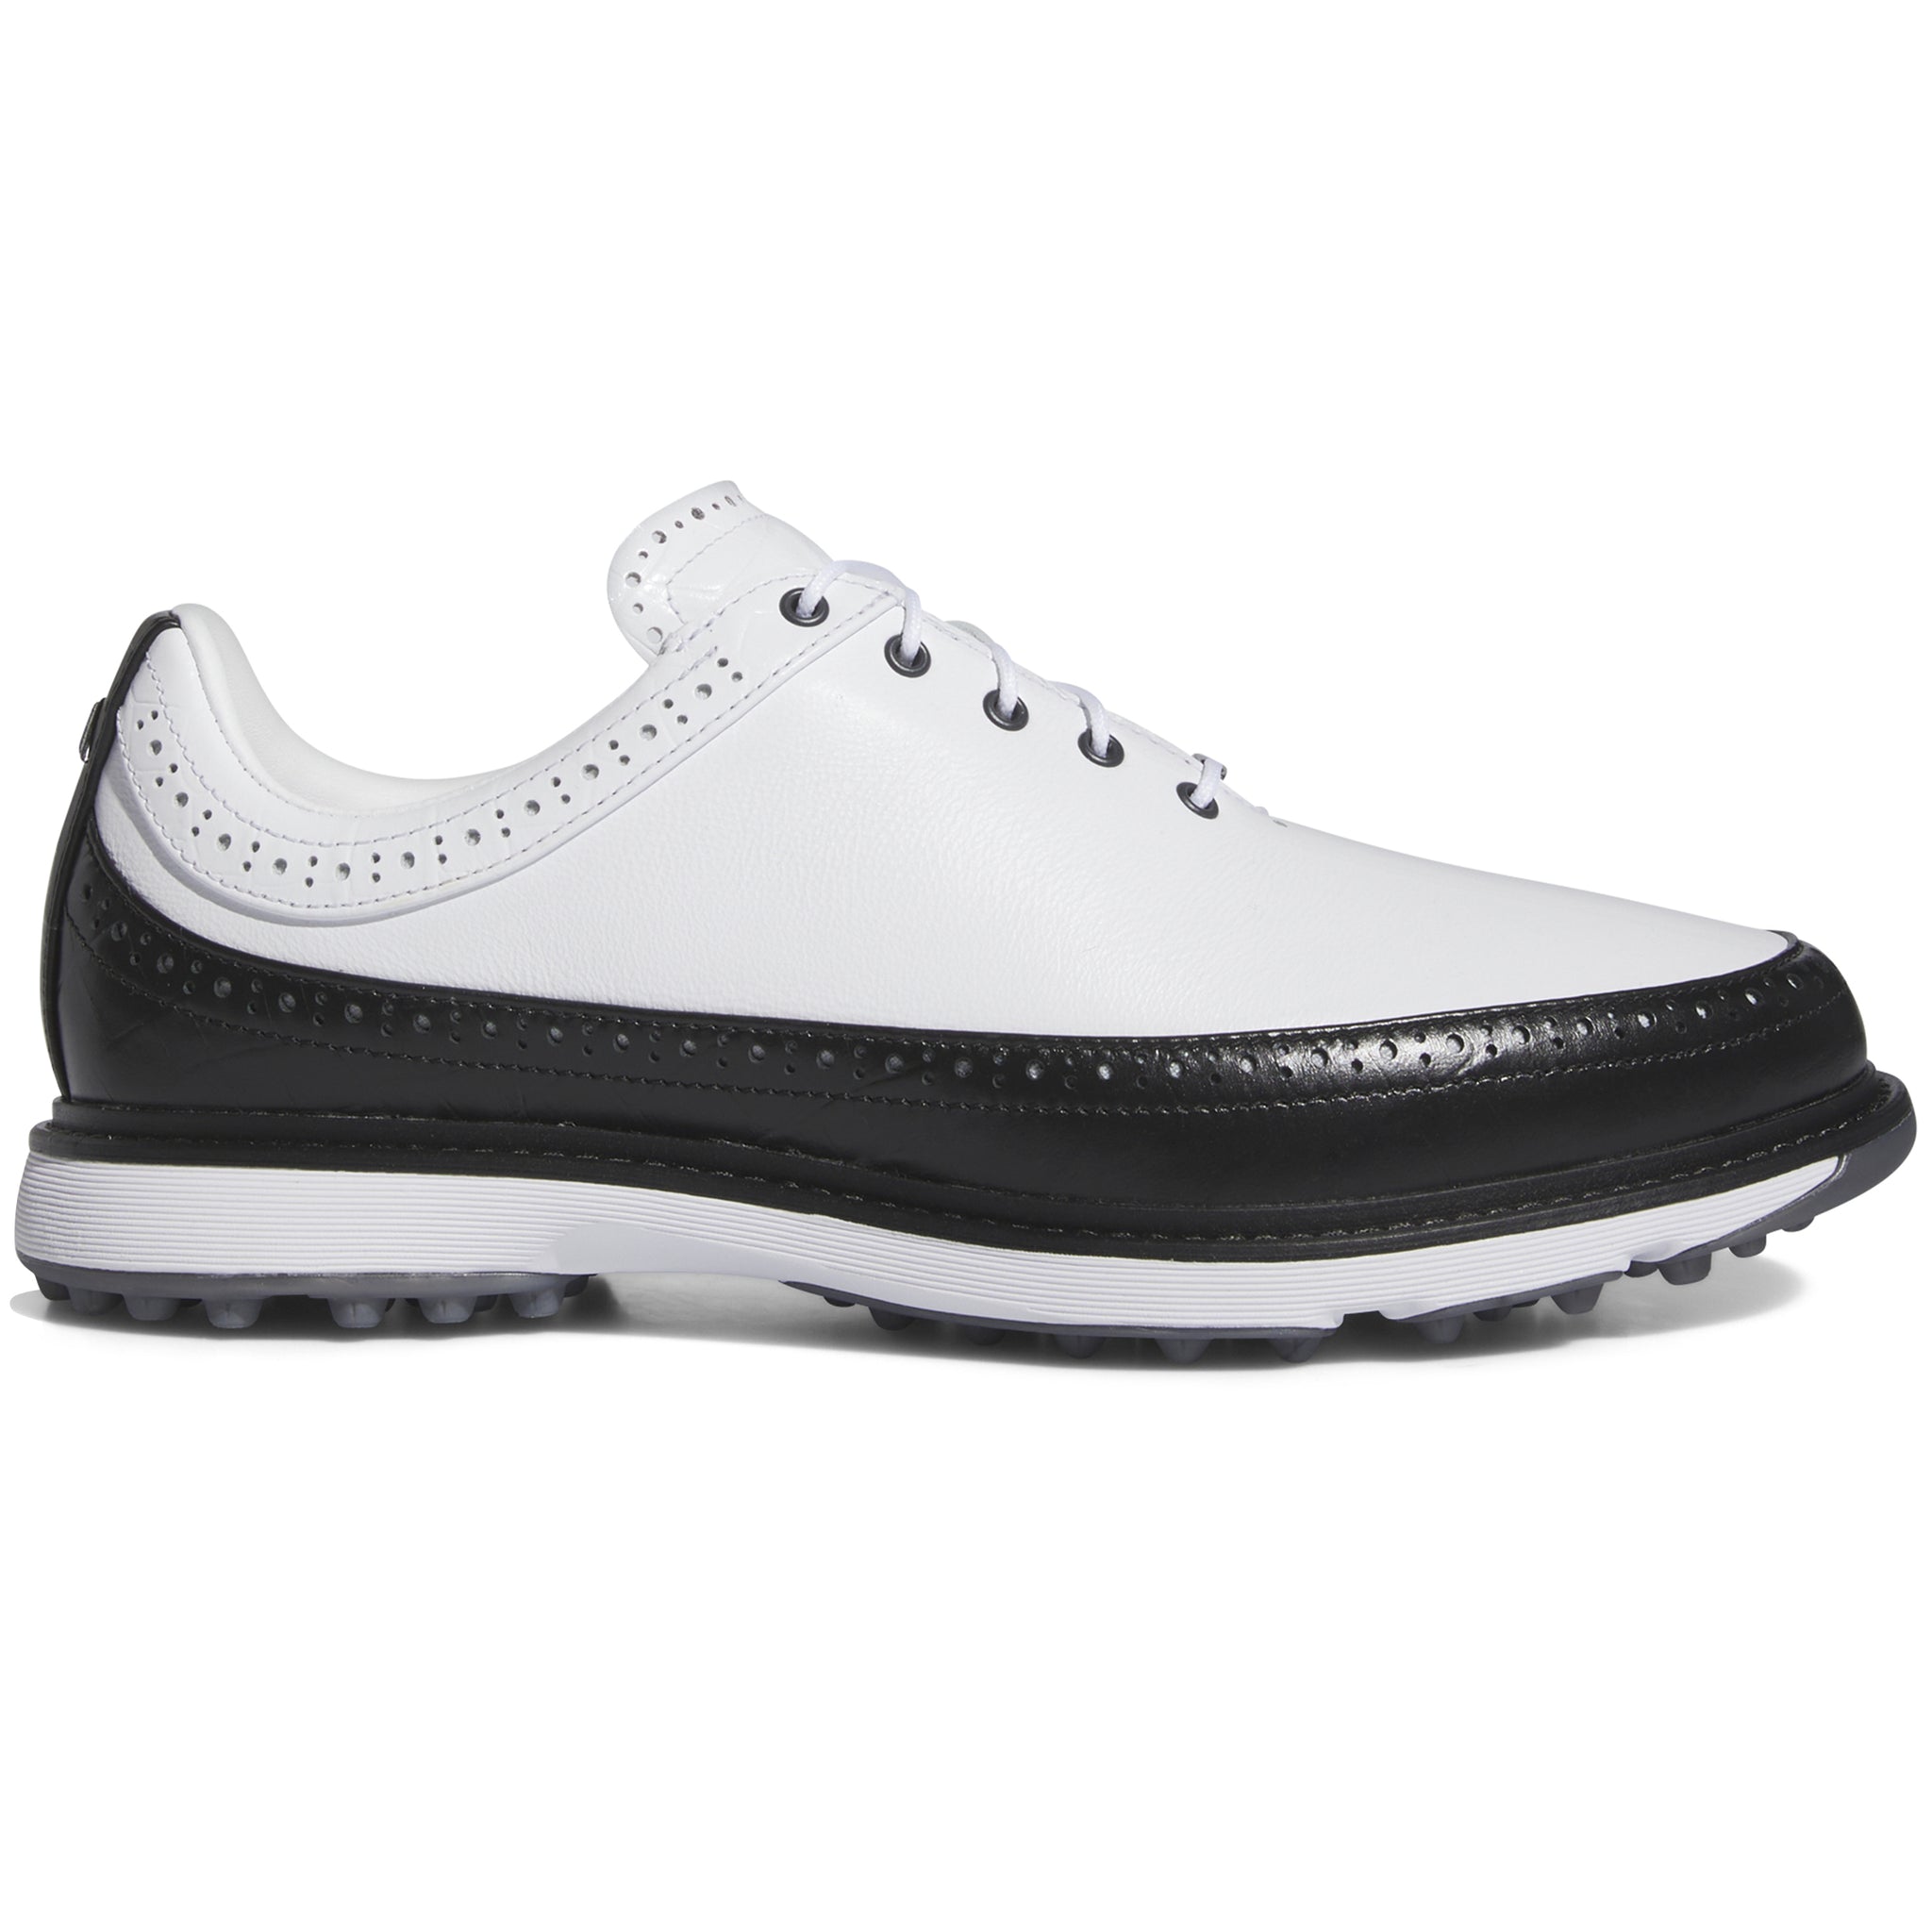 adidas-mc80-golf-shoes-id4750-white-core-black-bright-red